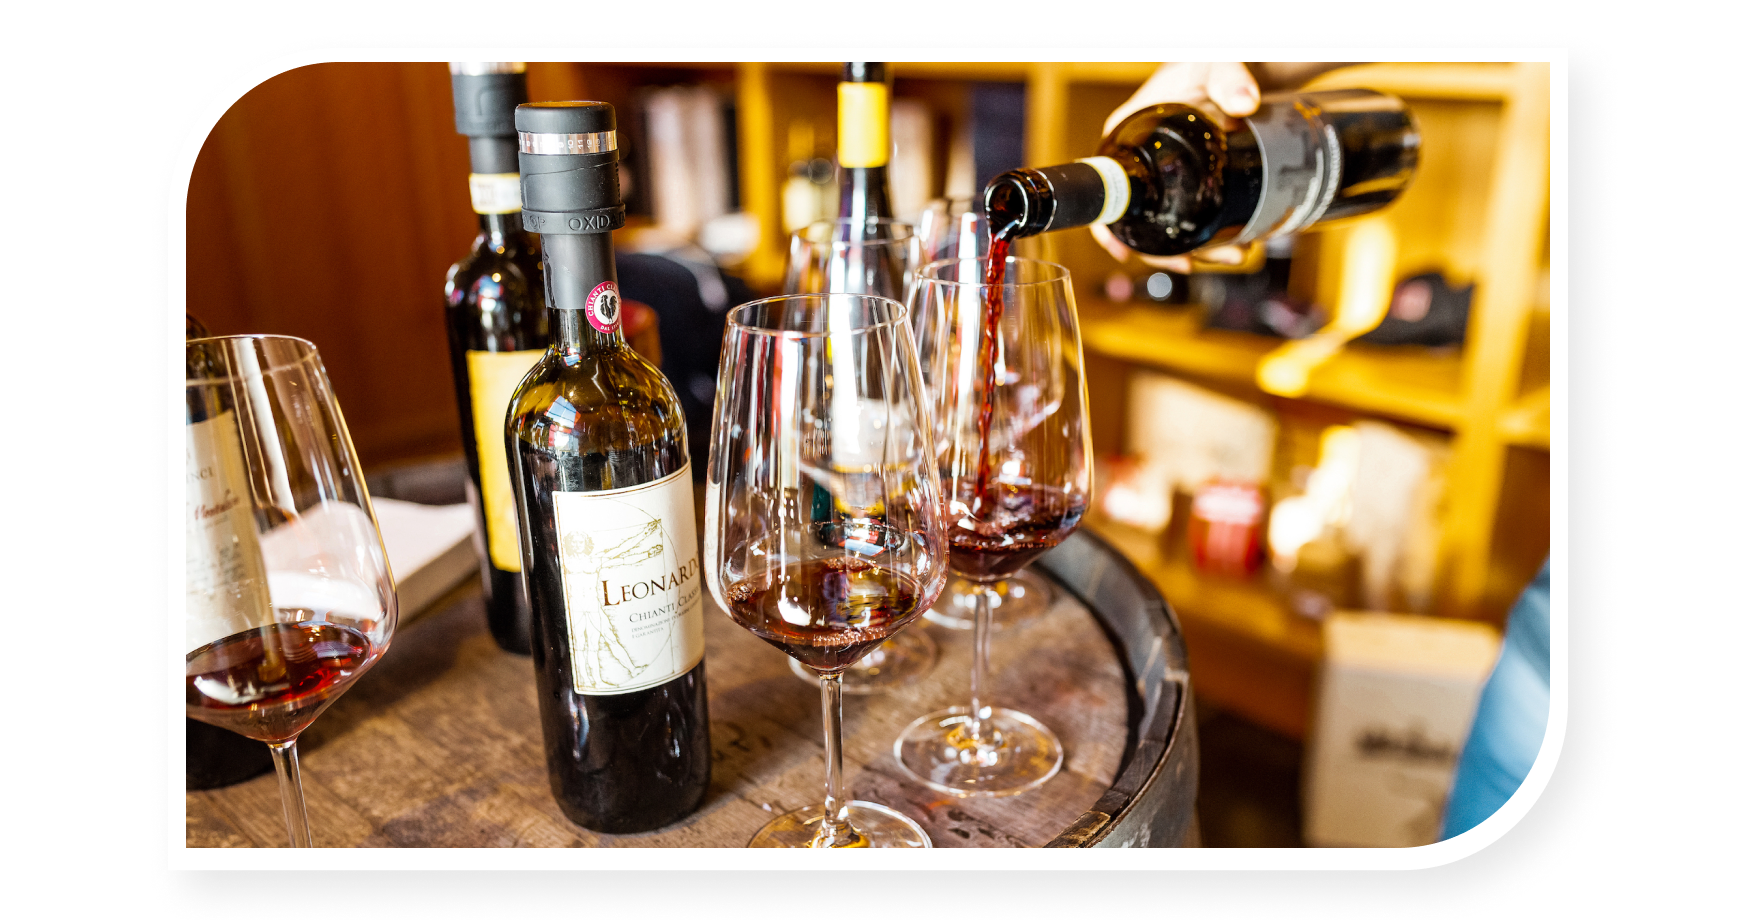 Serving world-famous Tuscany wine